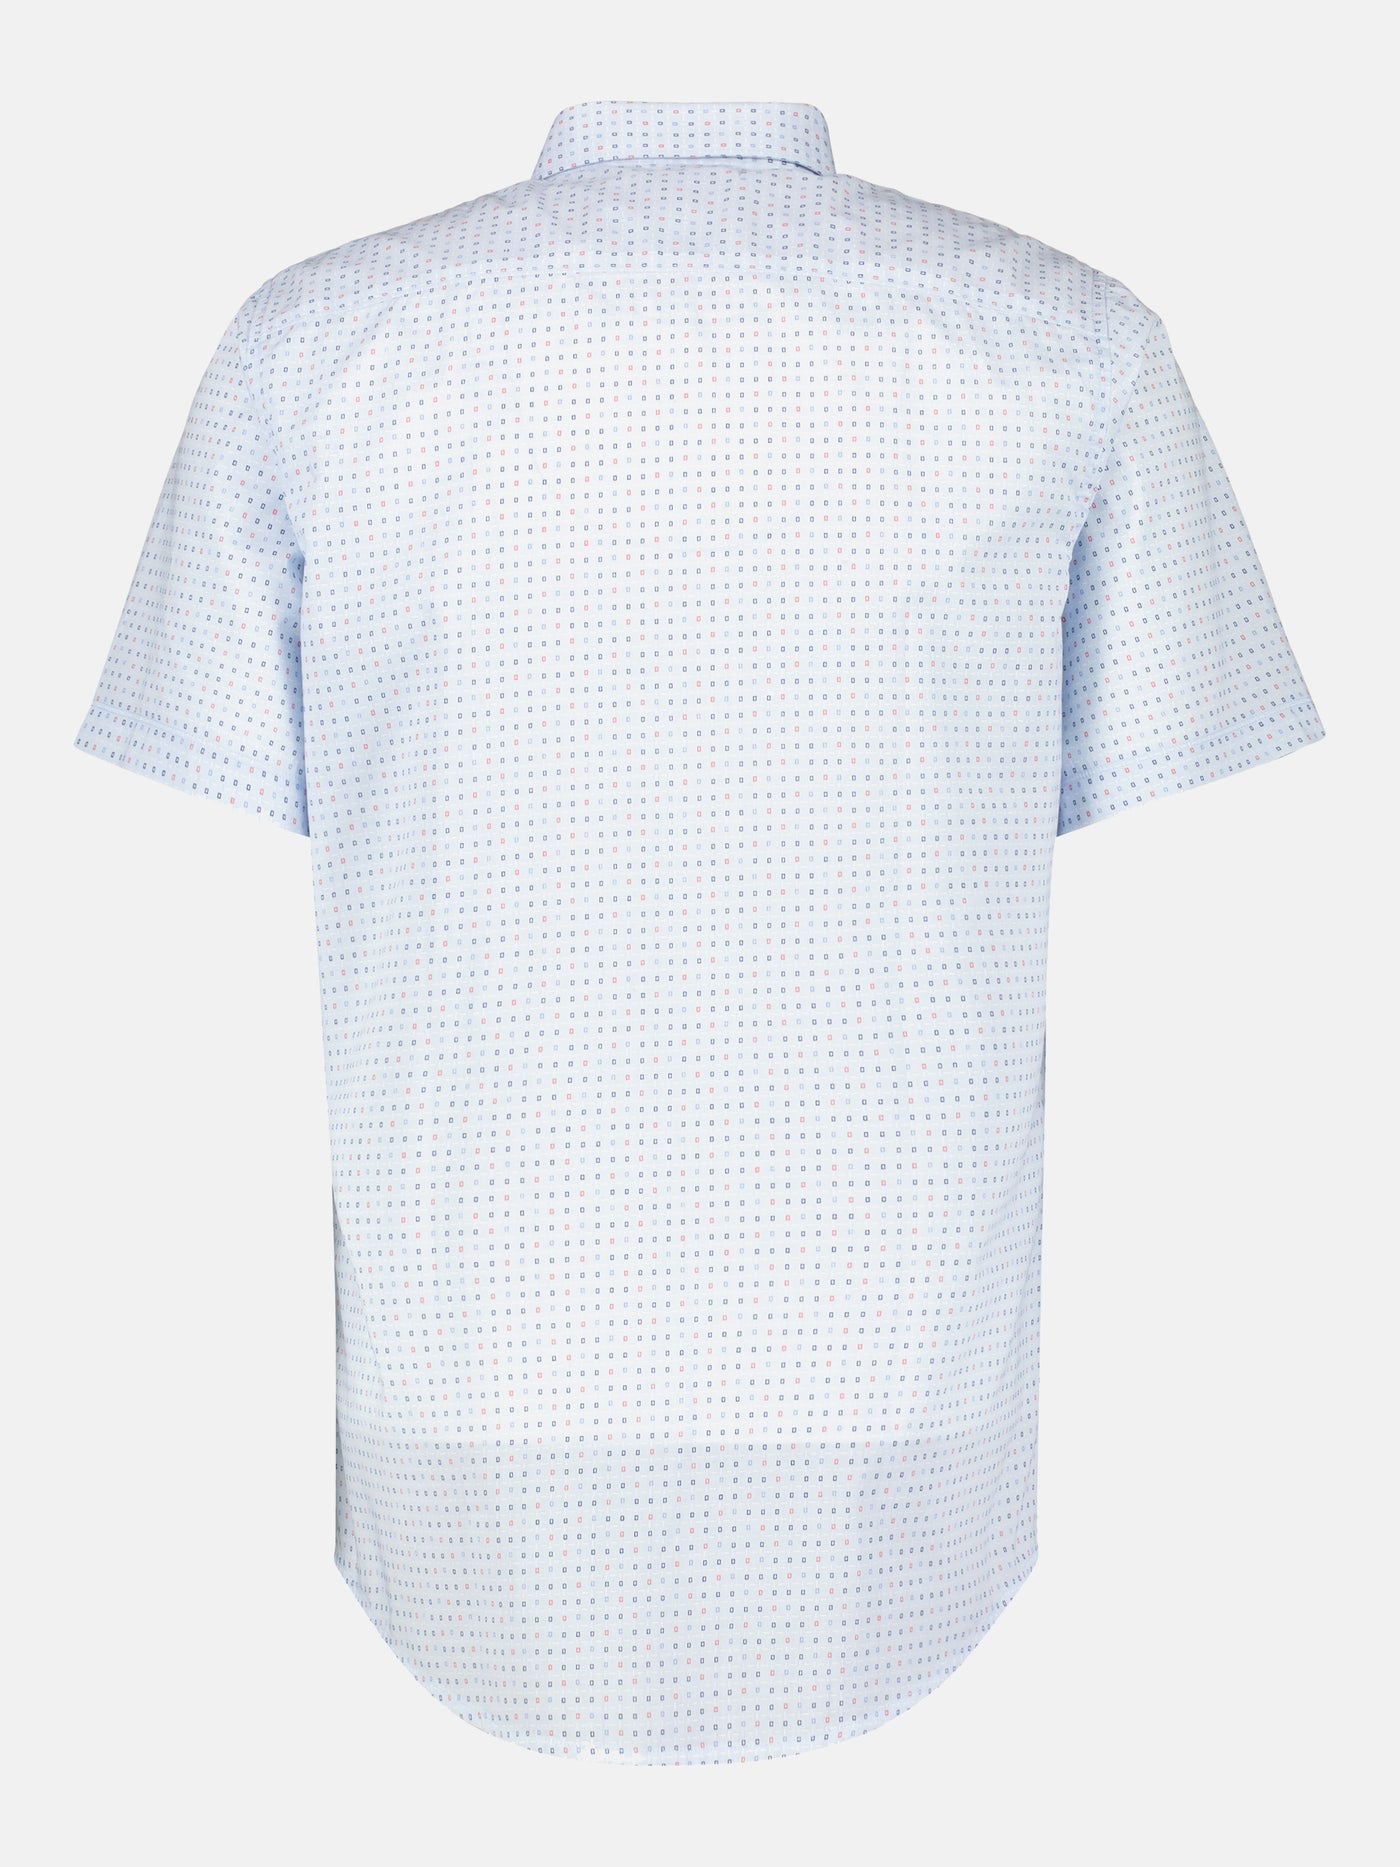 Short sleeve shirt, patterned